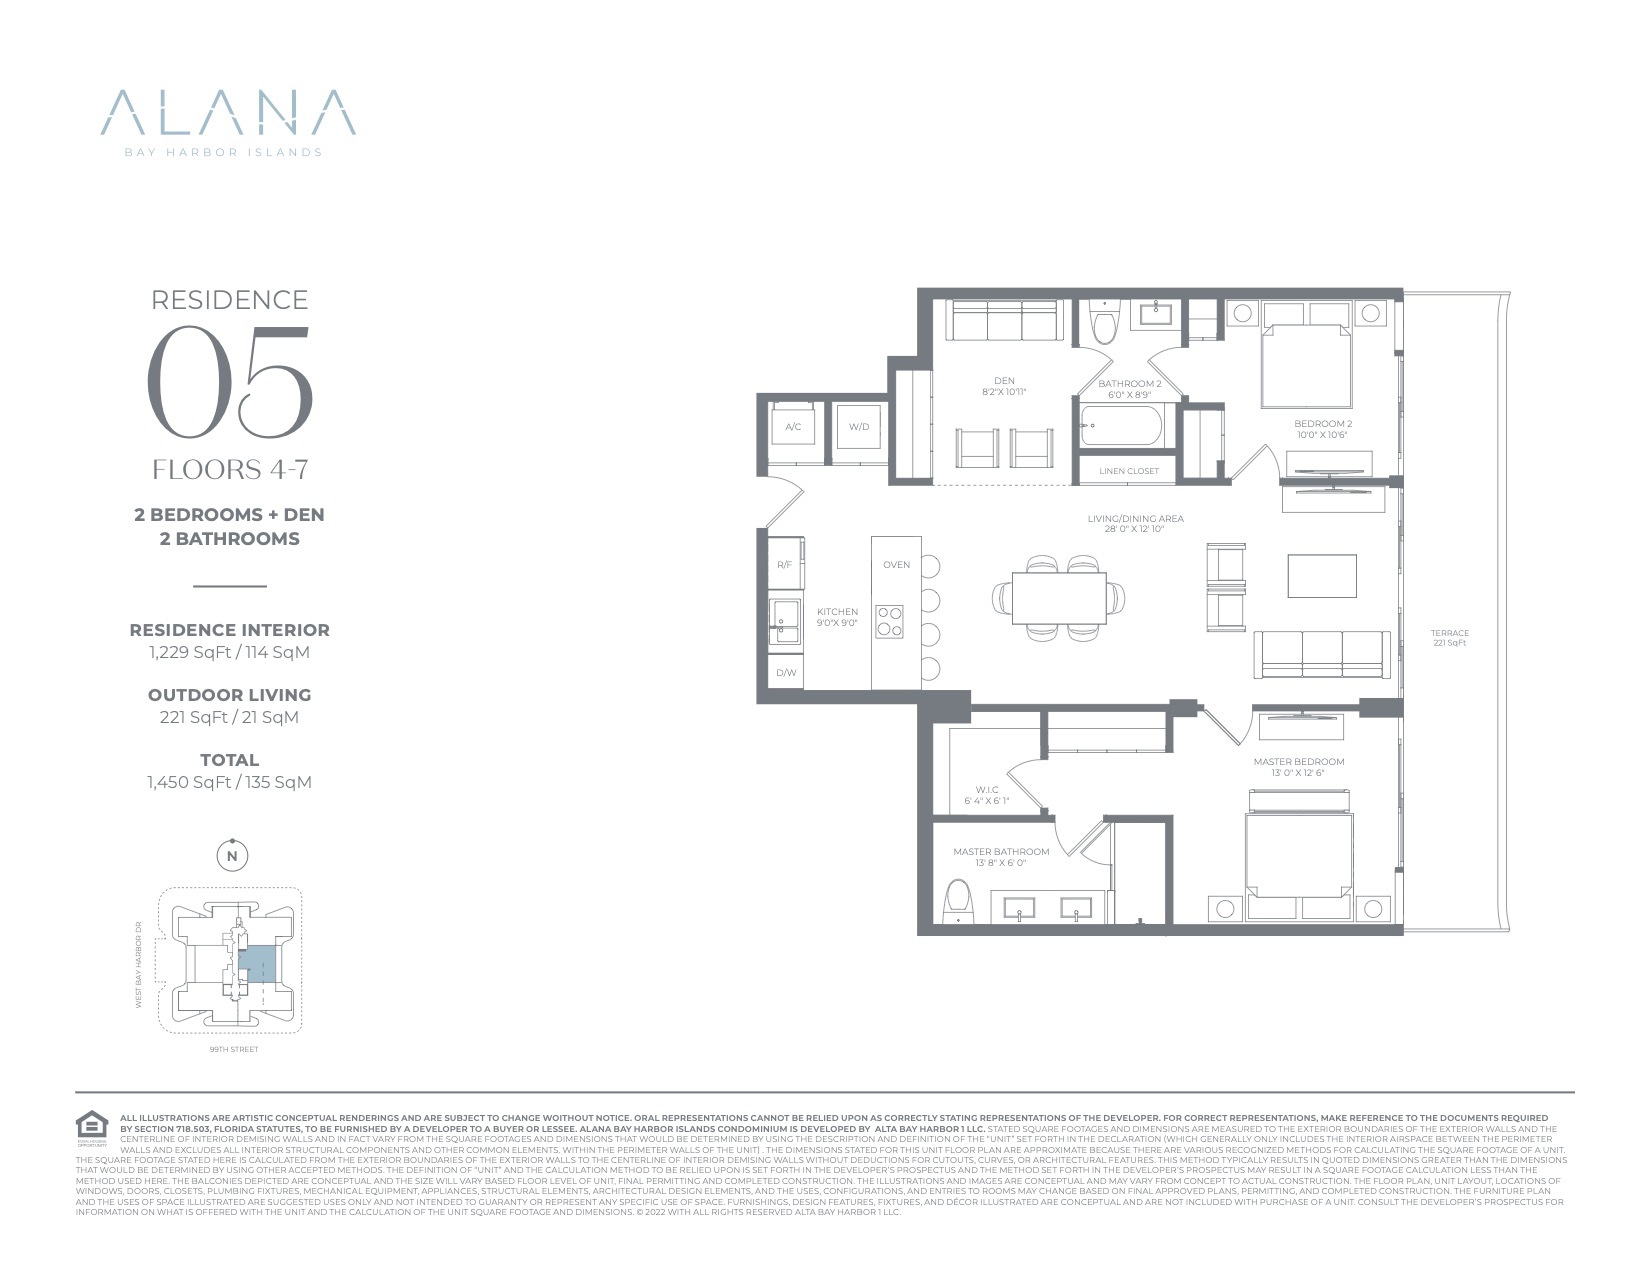 Floor Plan for Alana Bay Harbor Island Floorplans, Residence 05 Floors 4-7